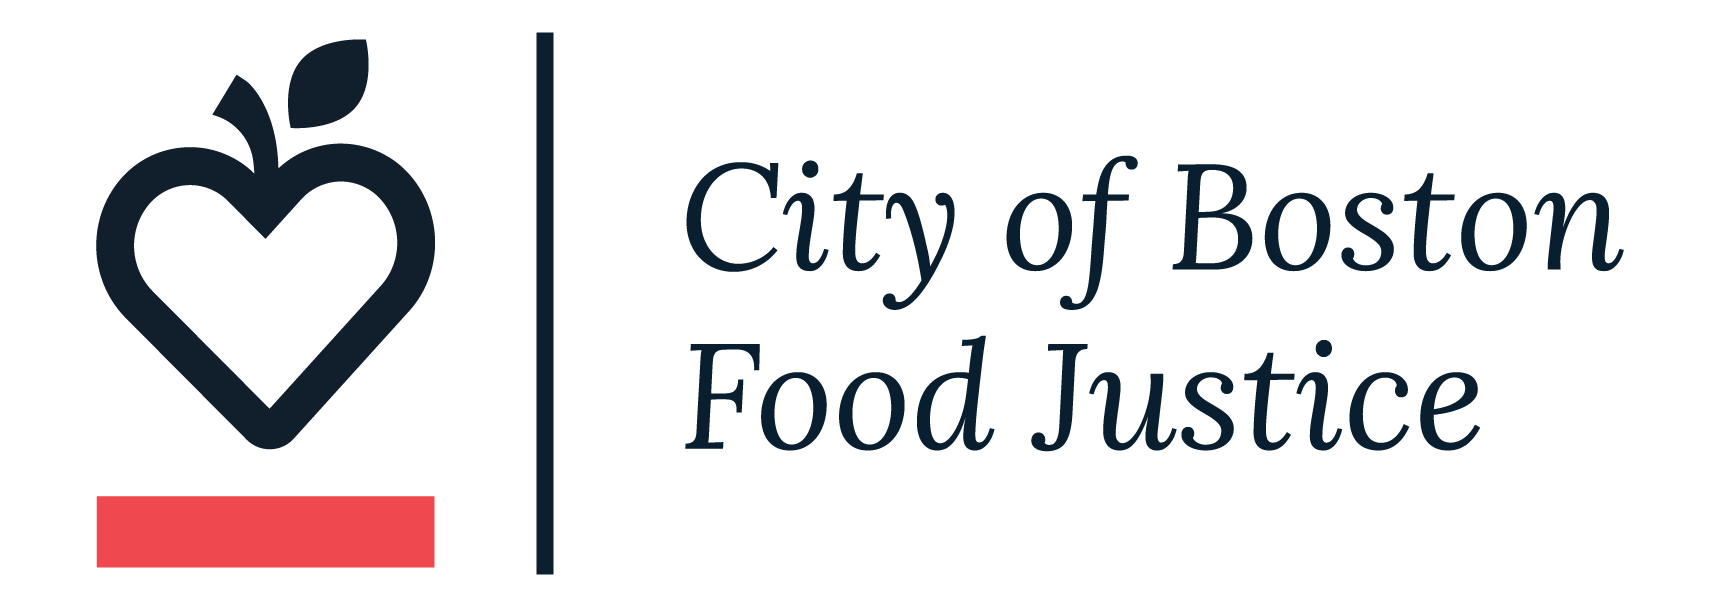 city of boston food justice logo